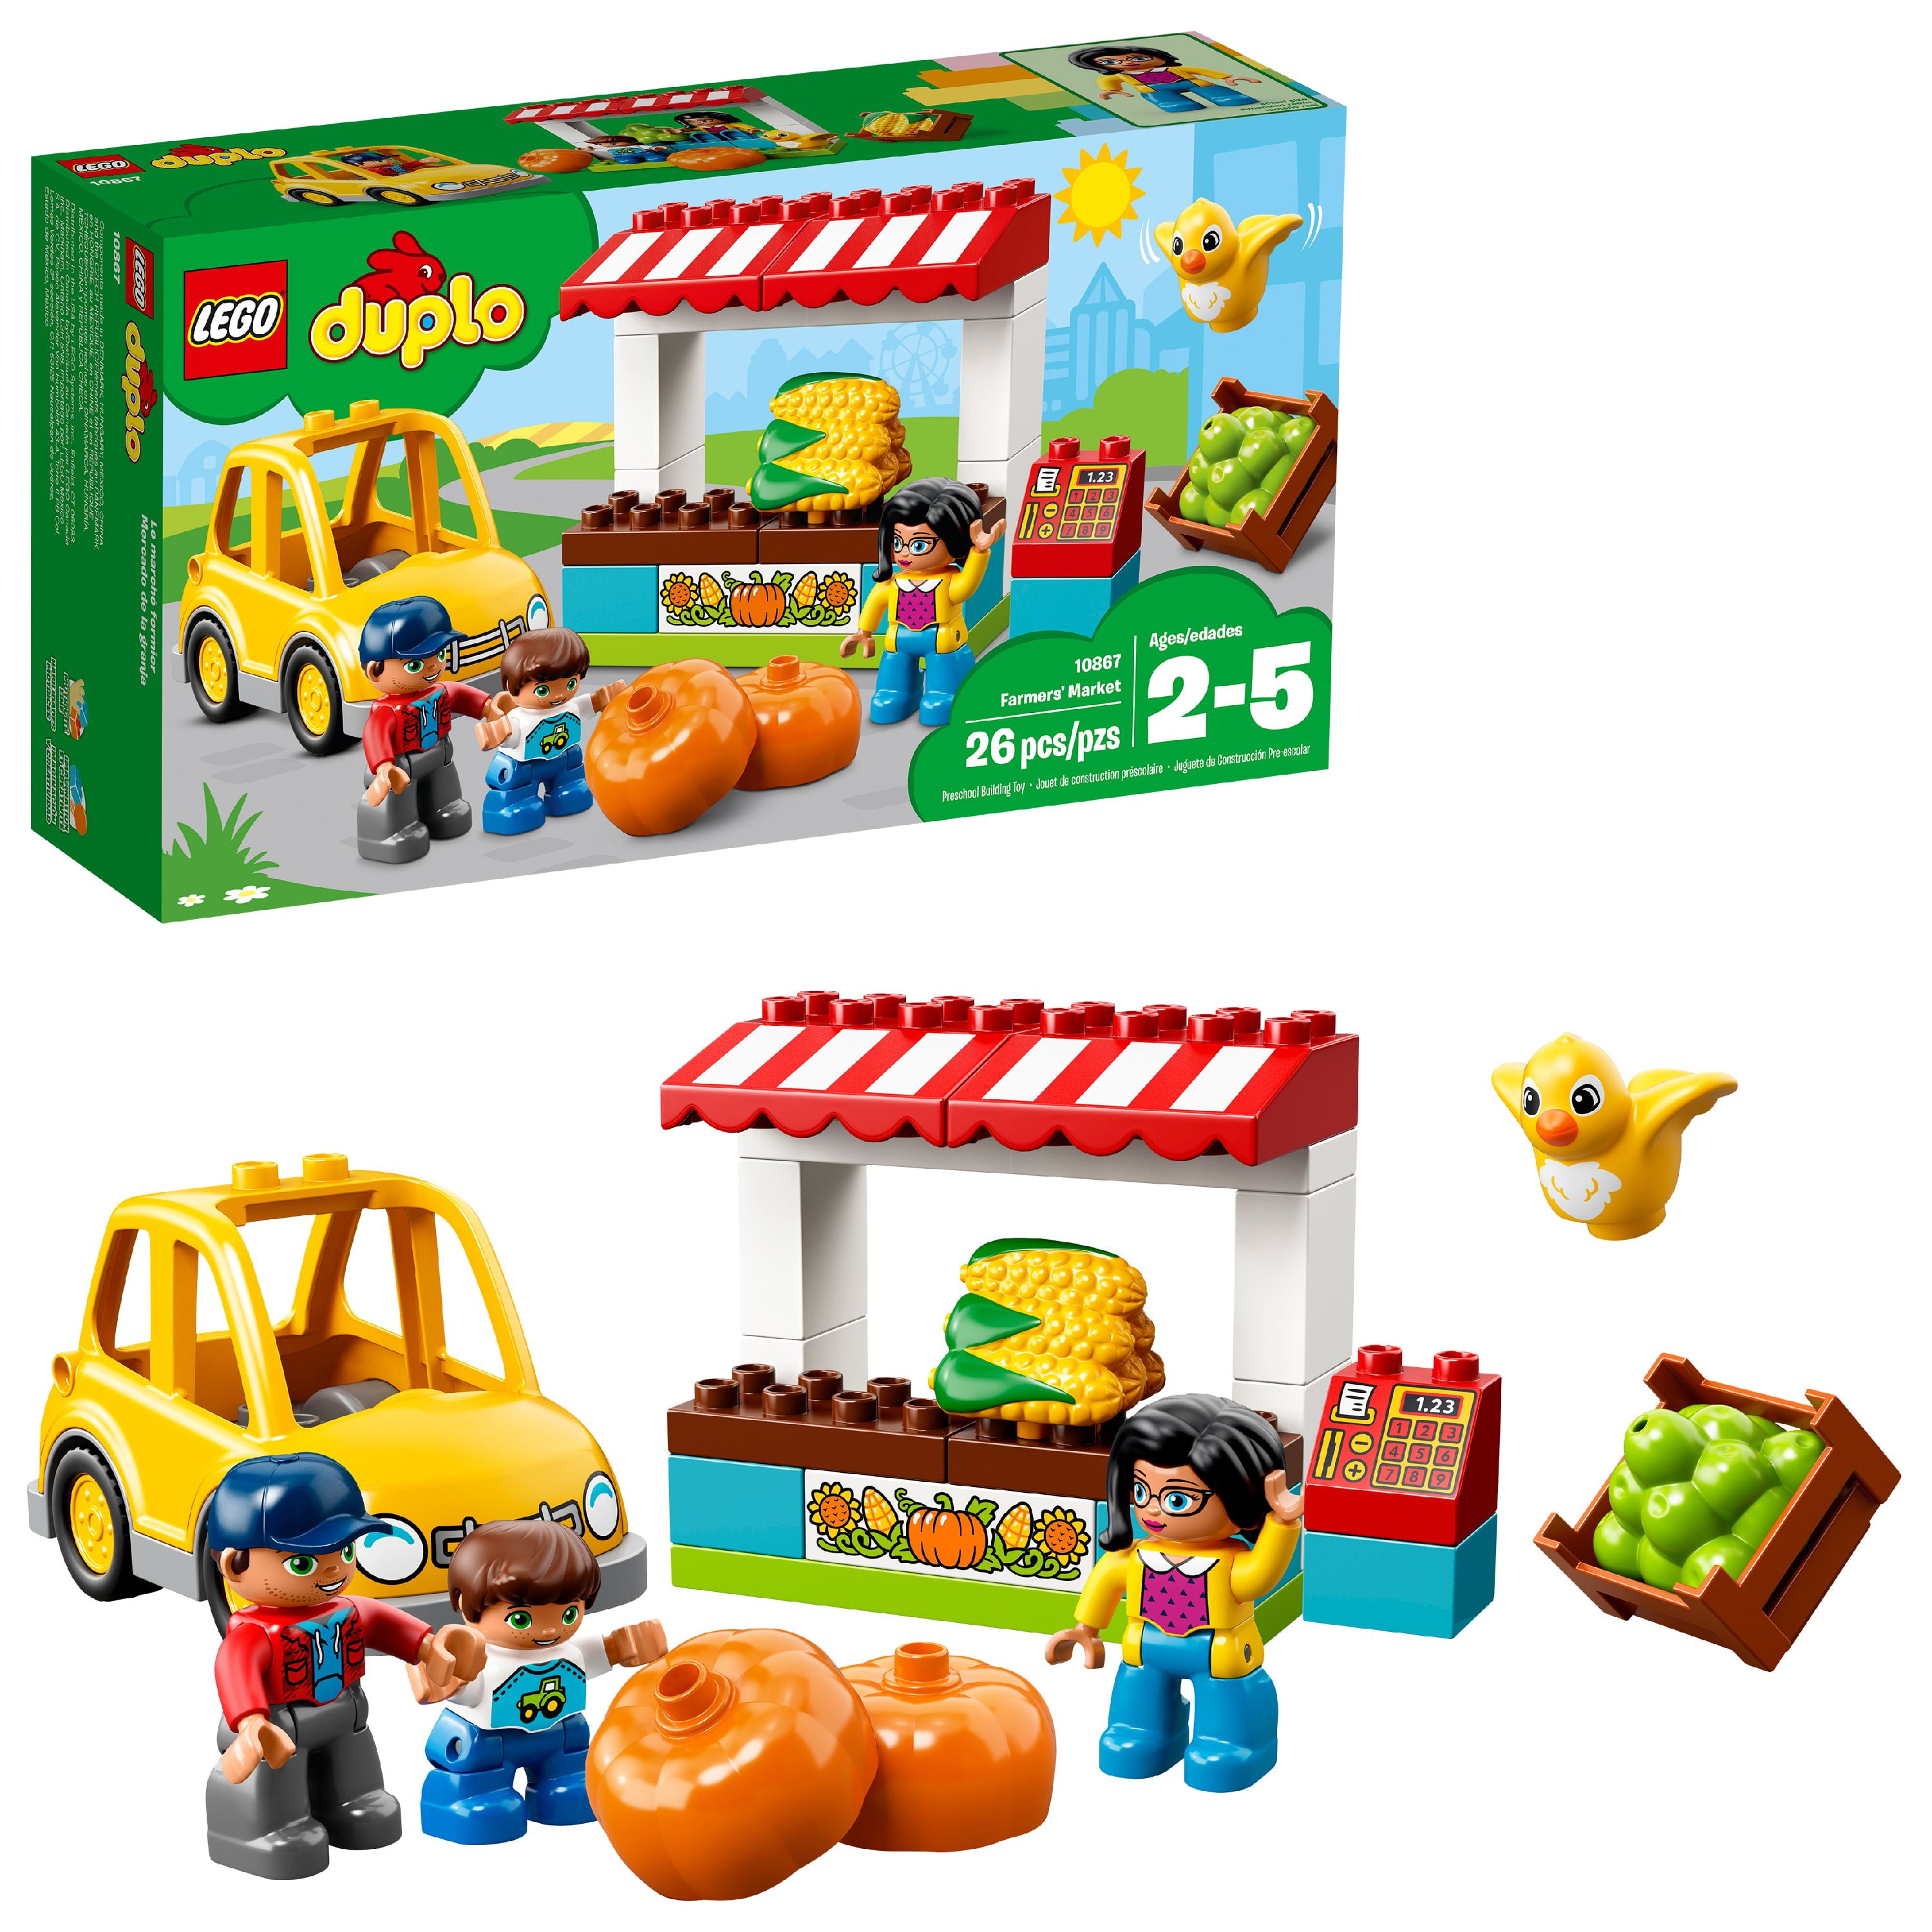 Lego Duplo 10870 New in Packaging Farm Animals Set